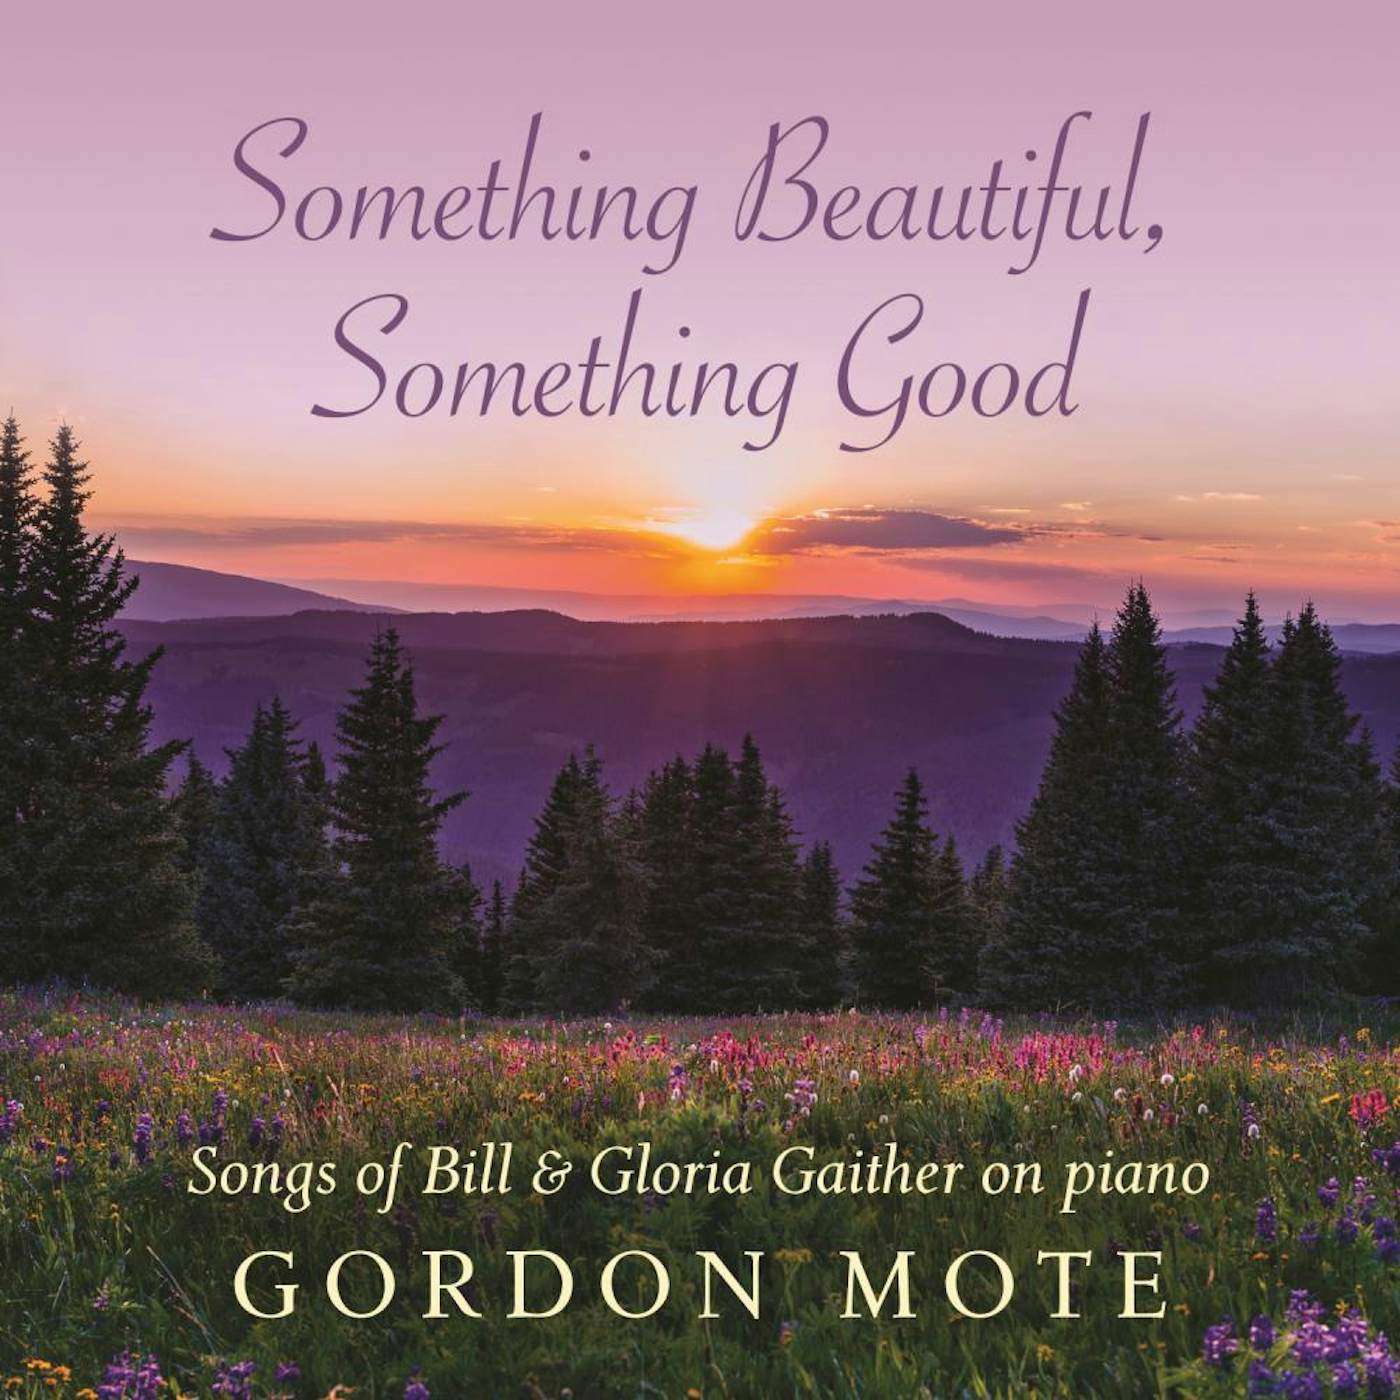 Gordon Mote SOMETHING BEAUTIFUL SOMETHING GOOD: SONGS OF BILL CD